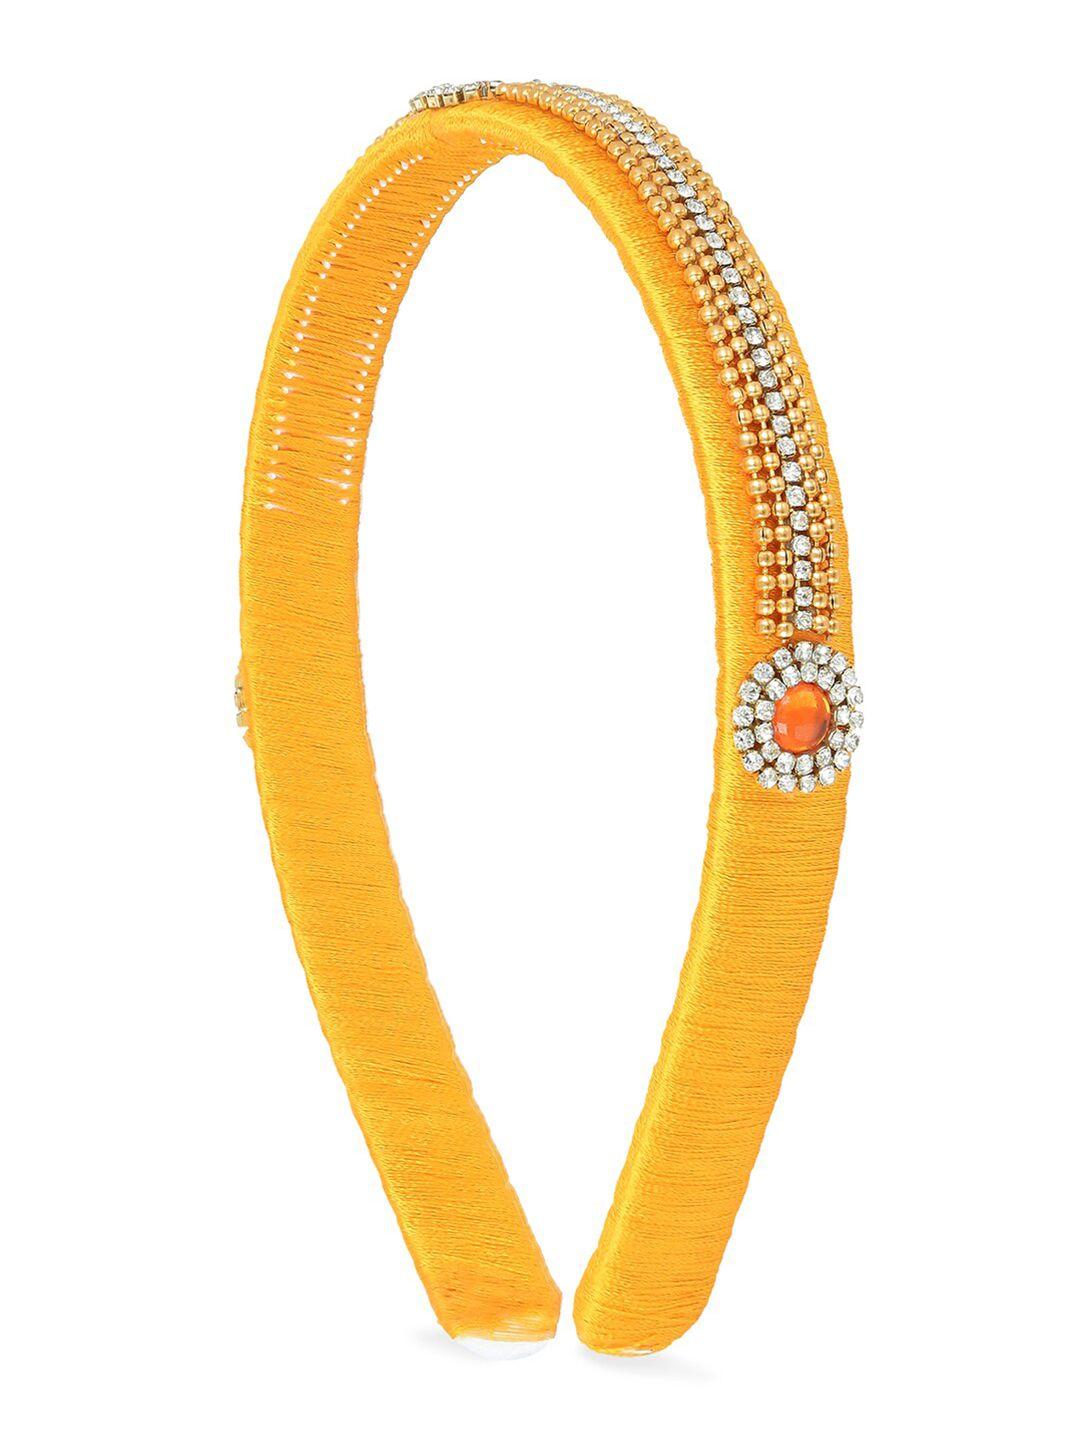 akshara girls mustard yellow & gold-toned embellished hairband